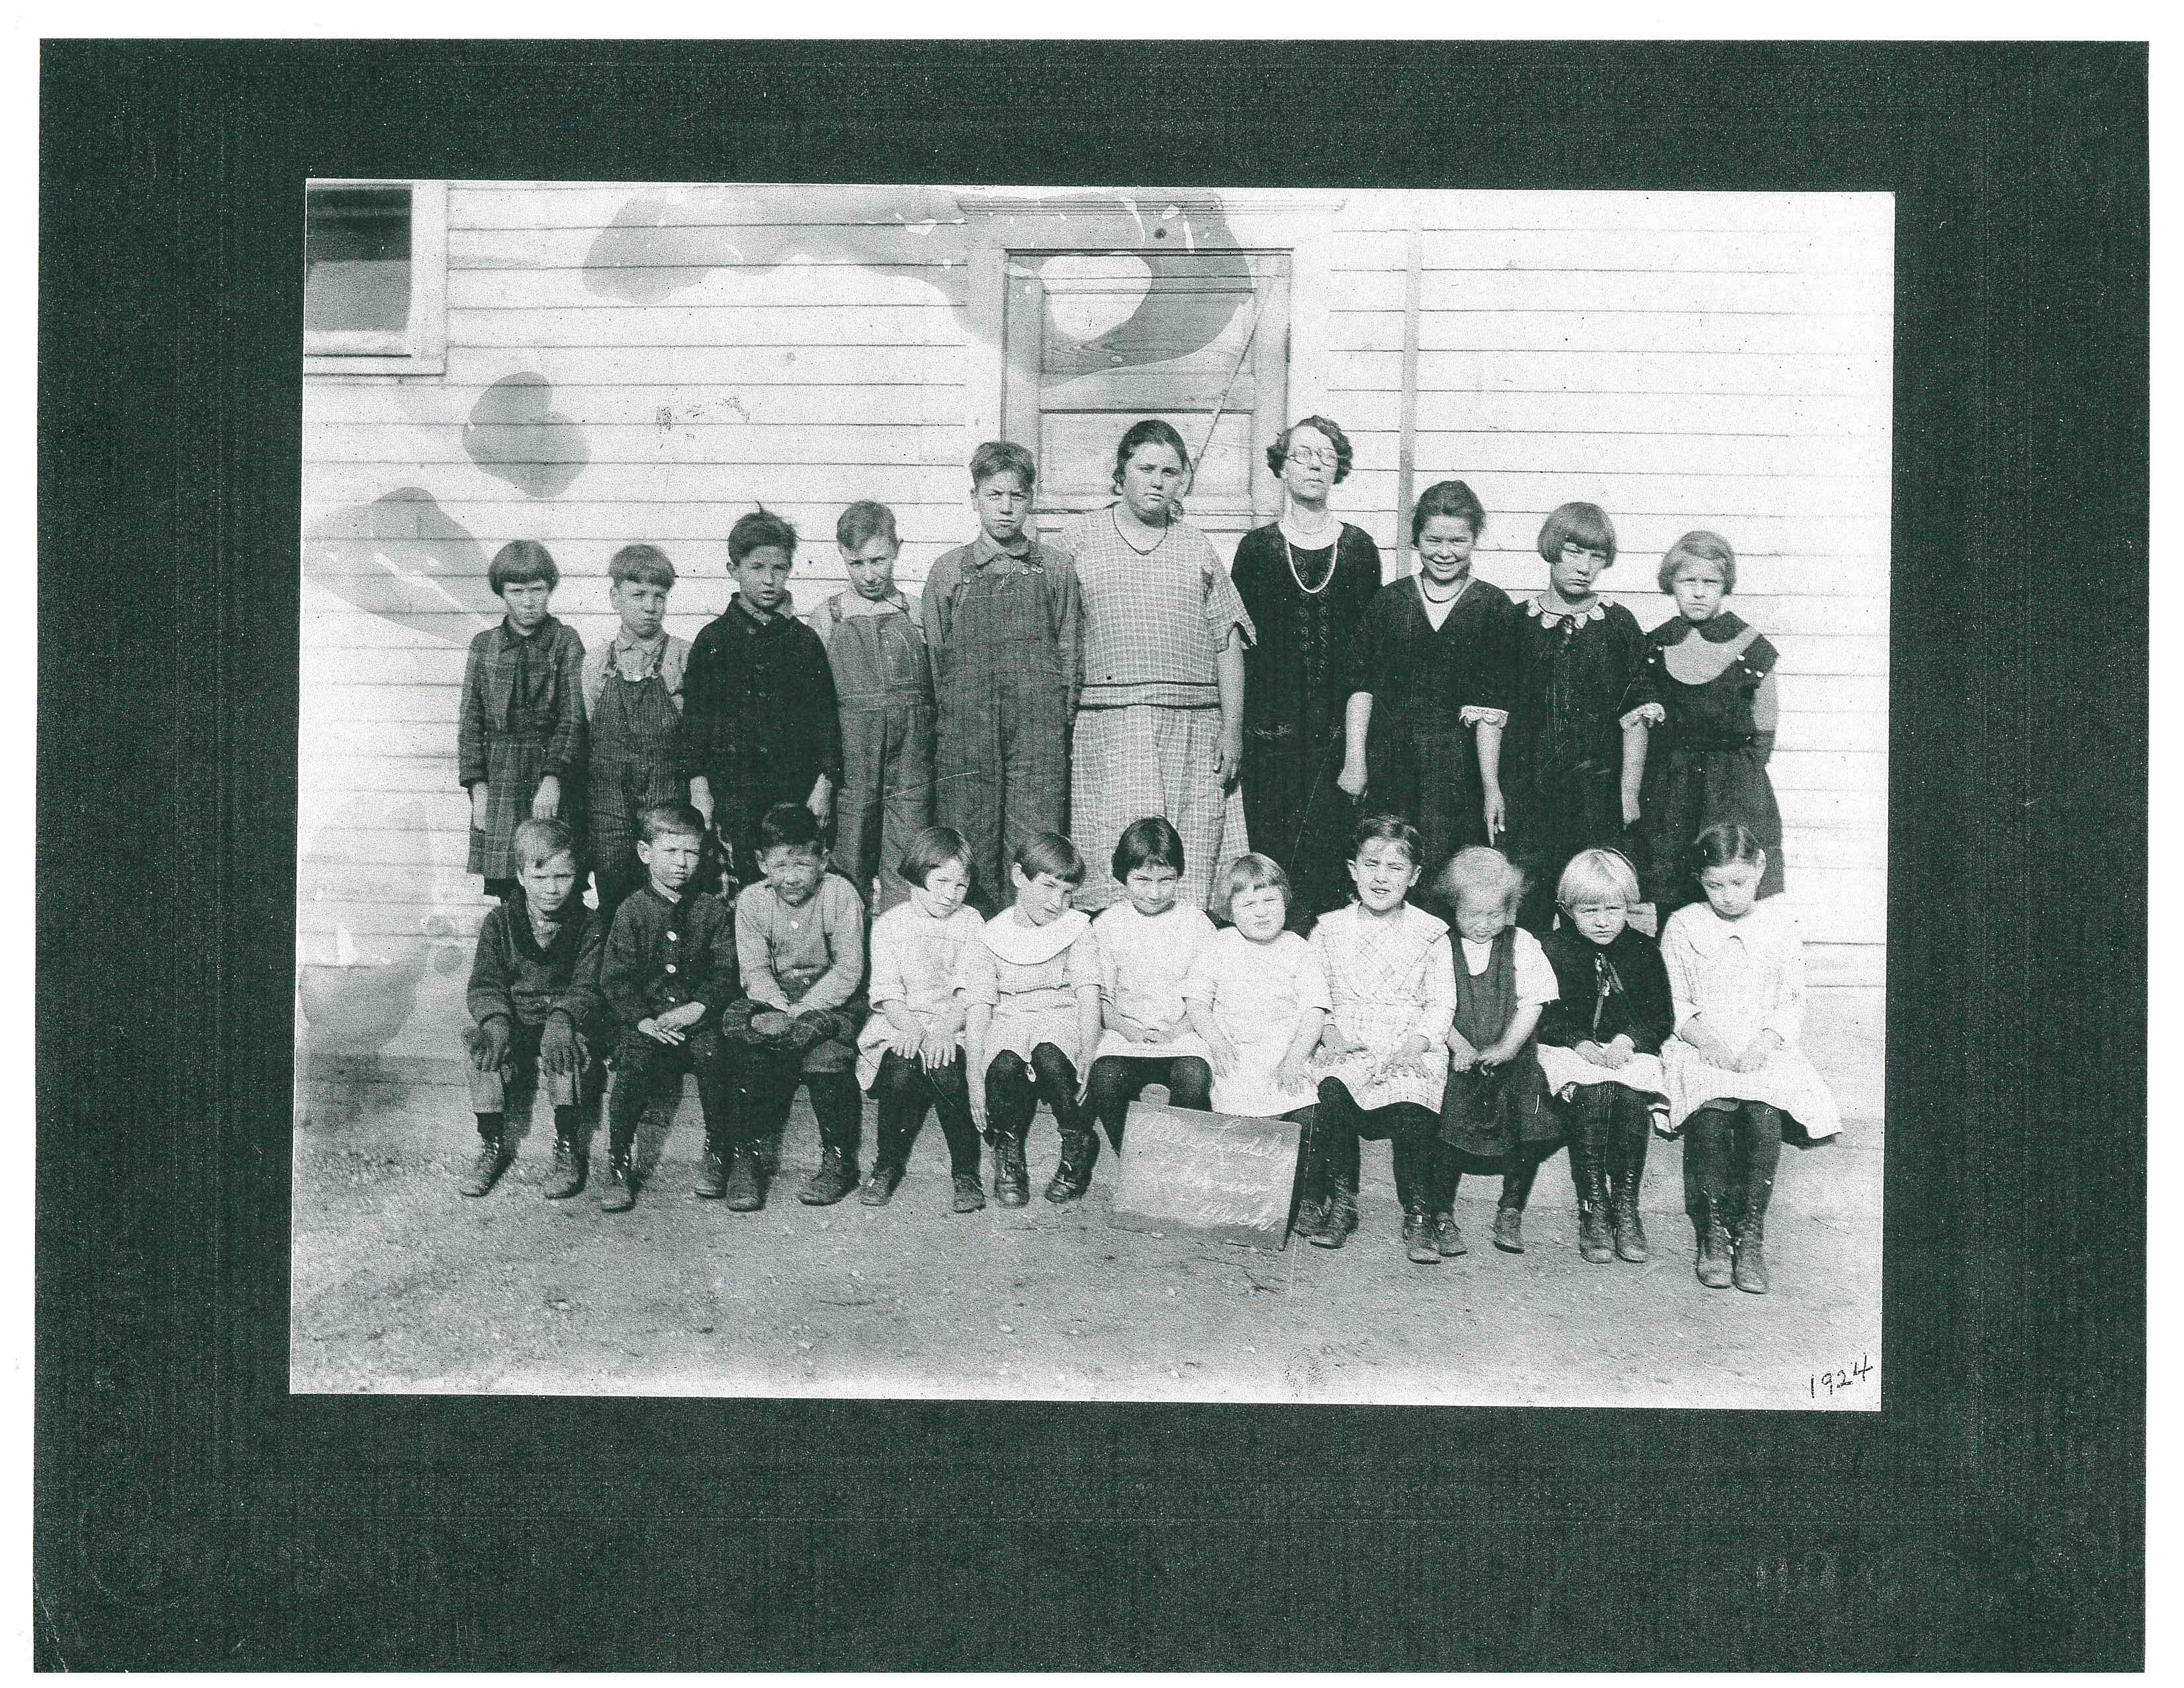 MoffittSchool1924